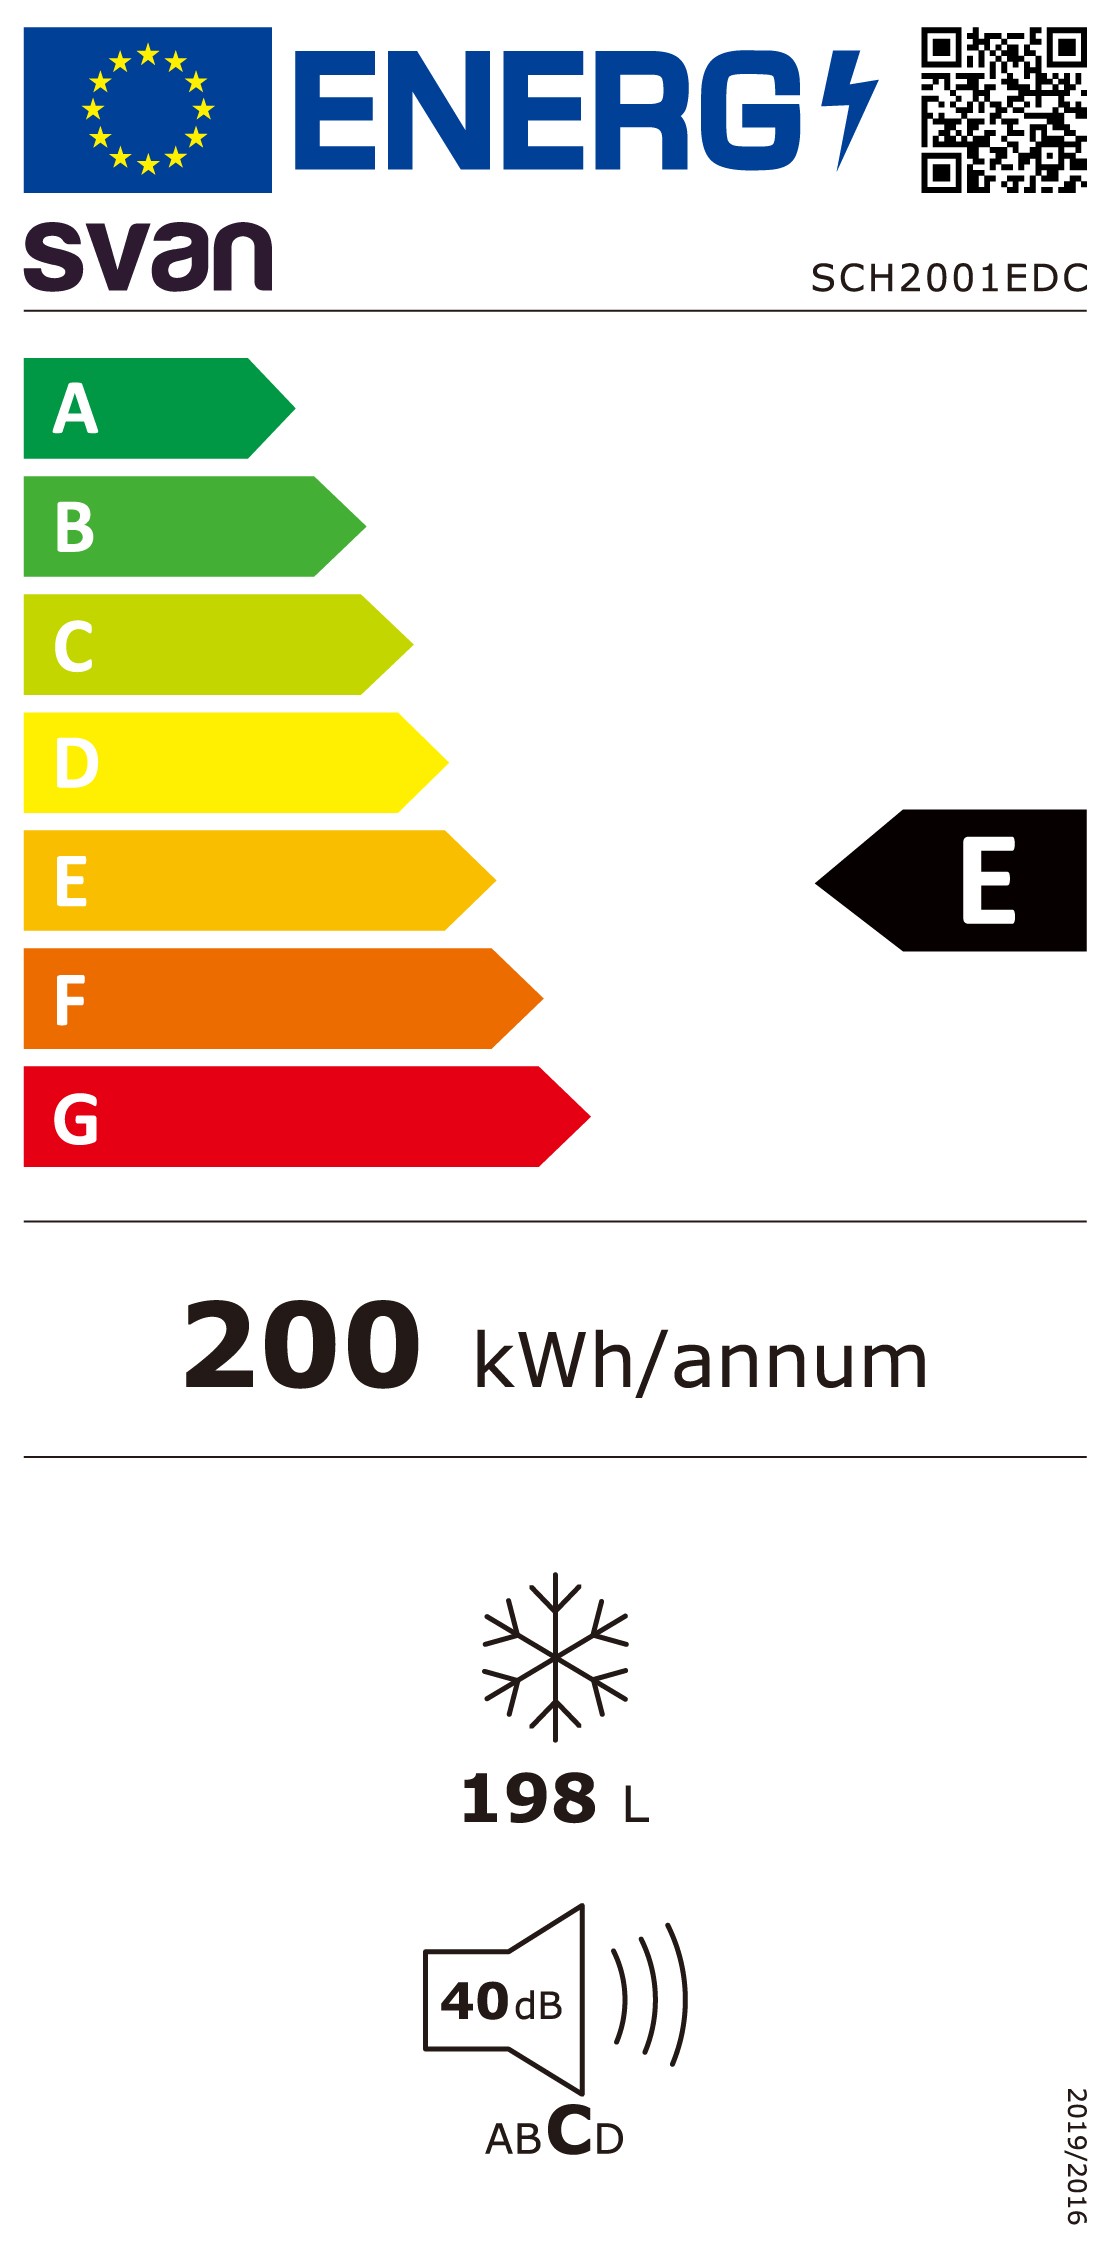 Etiqueta de Eficiencia Energética - SCH2001EDC